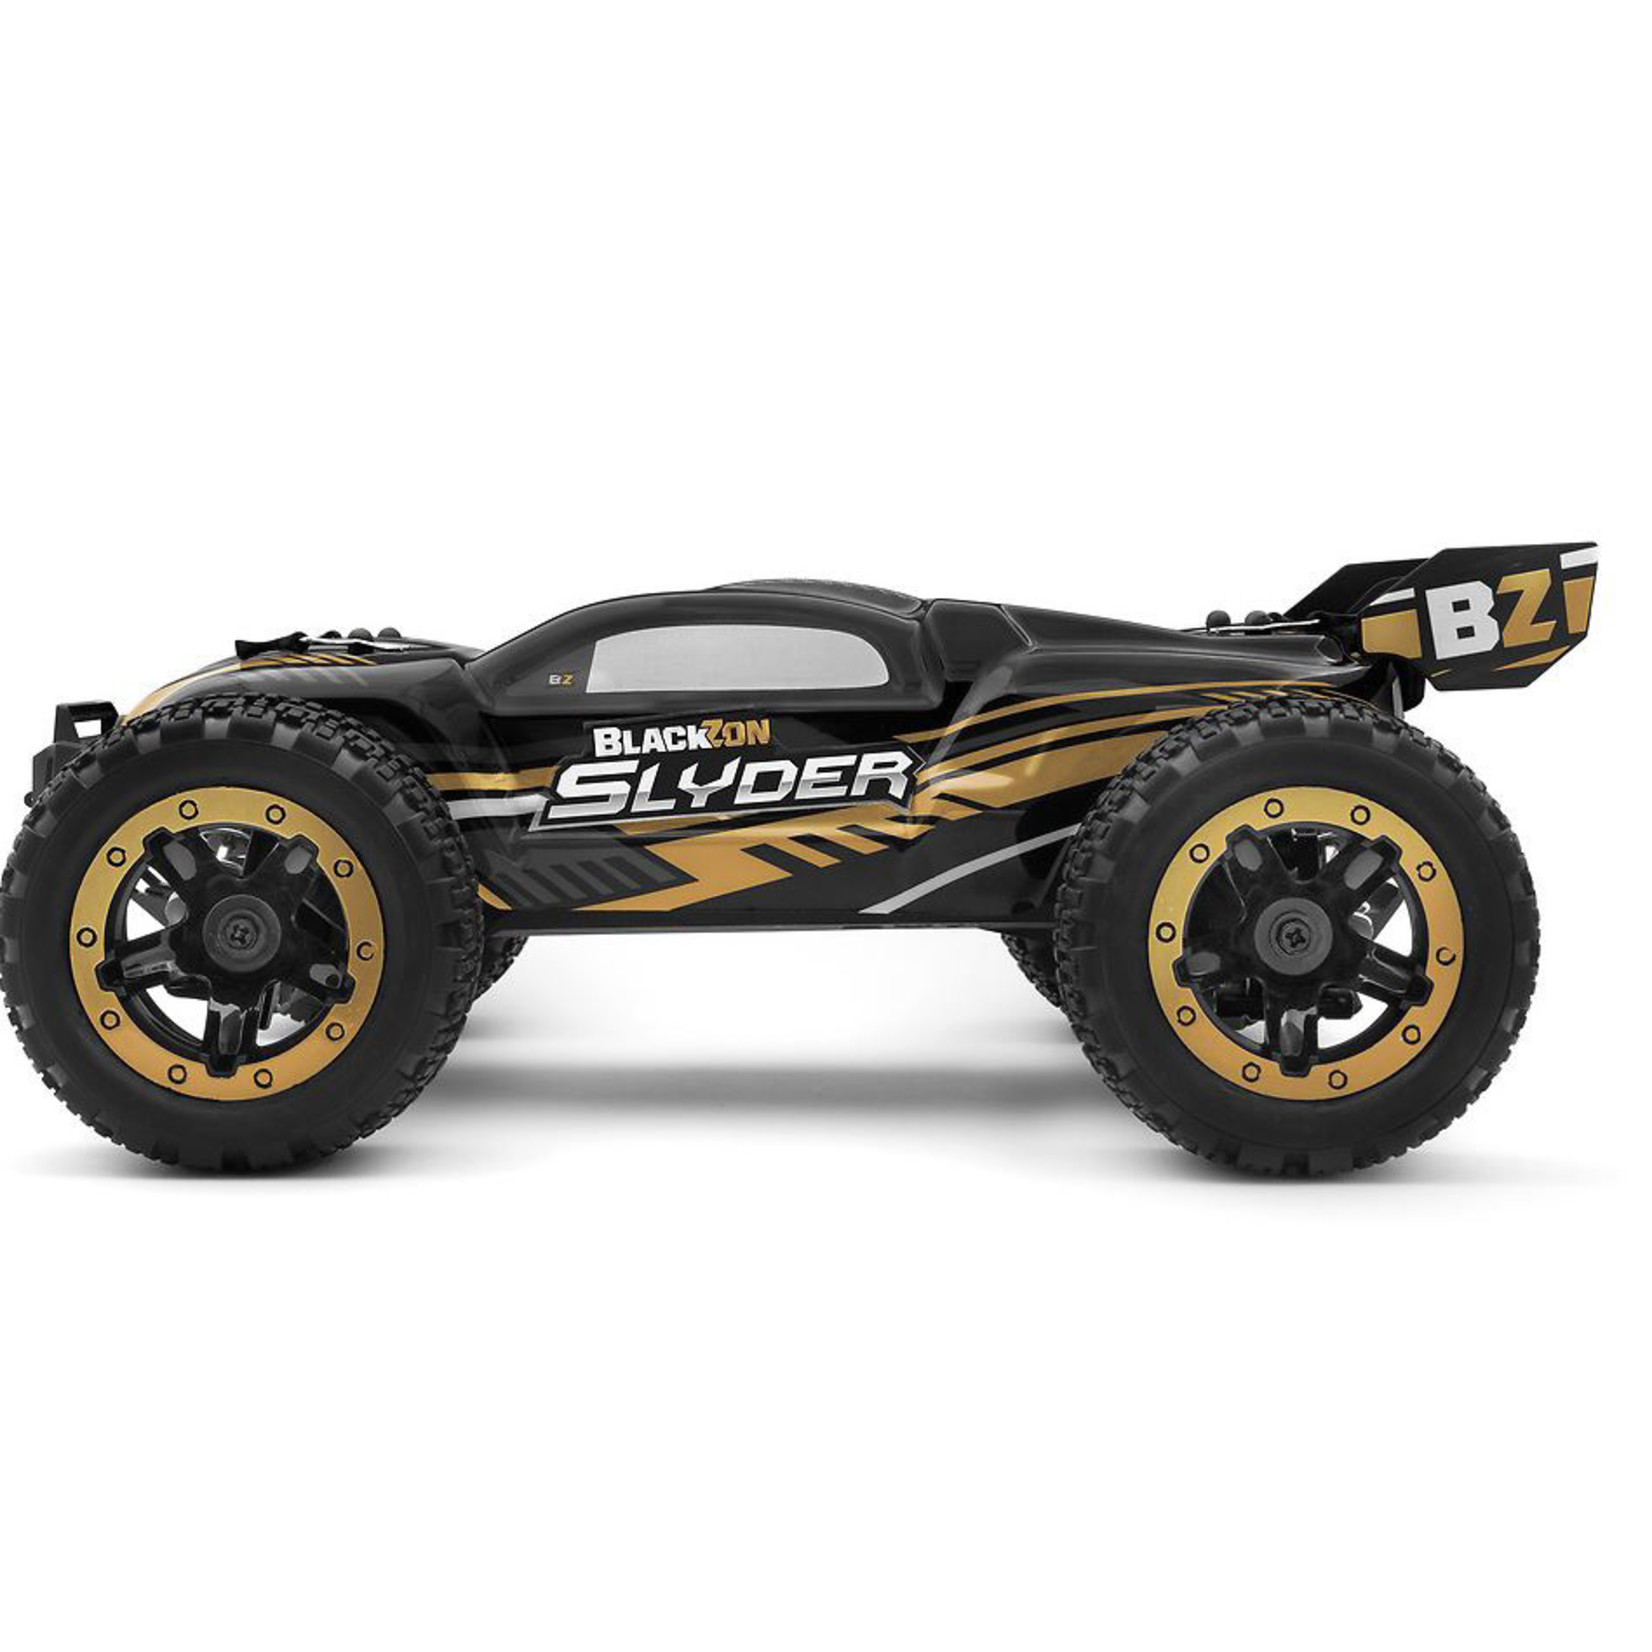 Blackzon Slyder 1/16th RTR 4WD Electric Stadium Truck - Gold